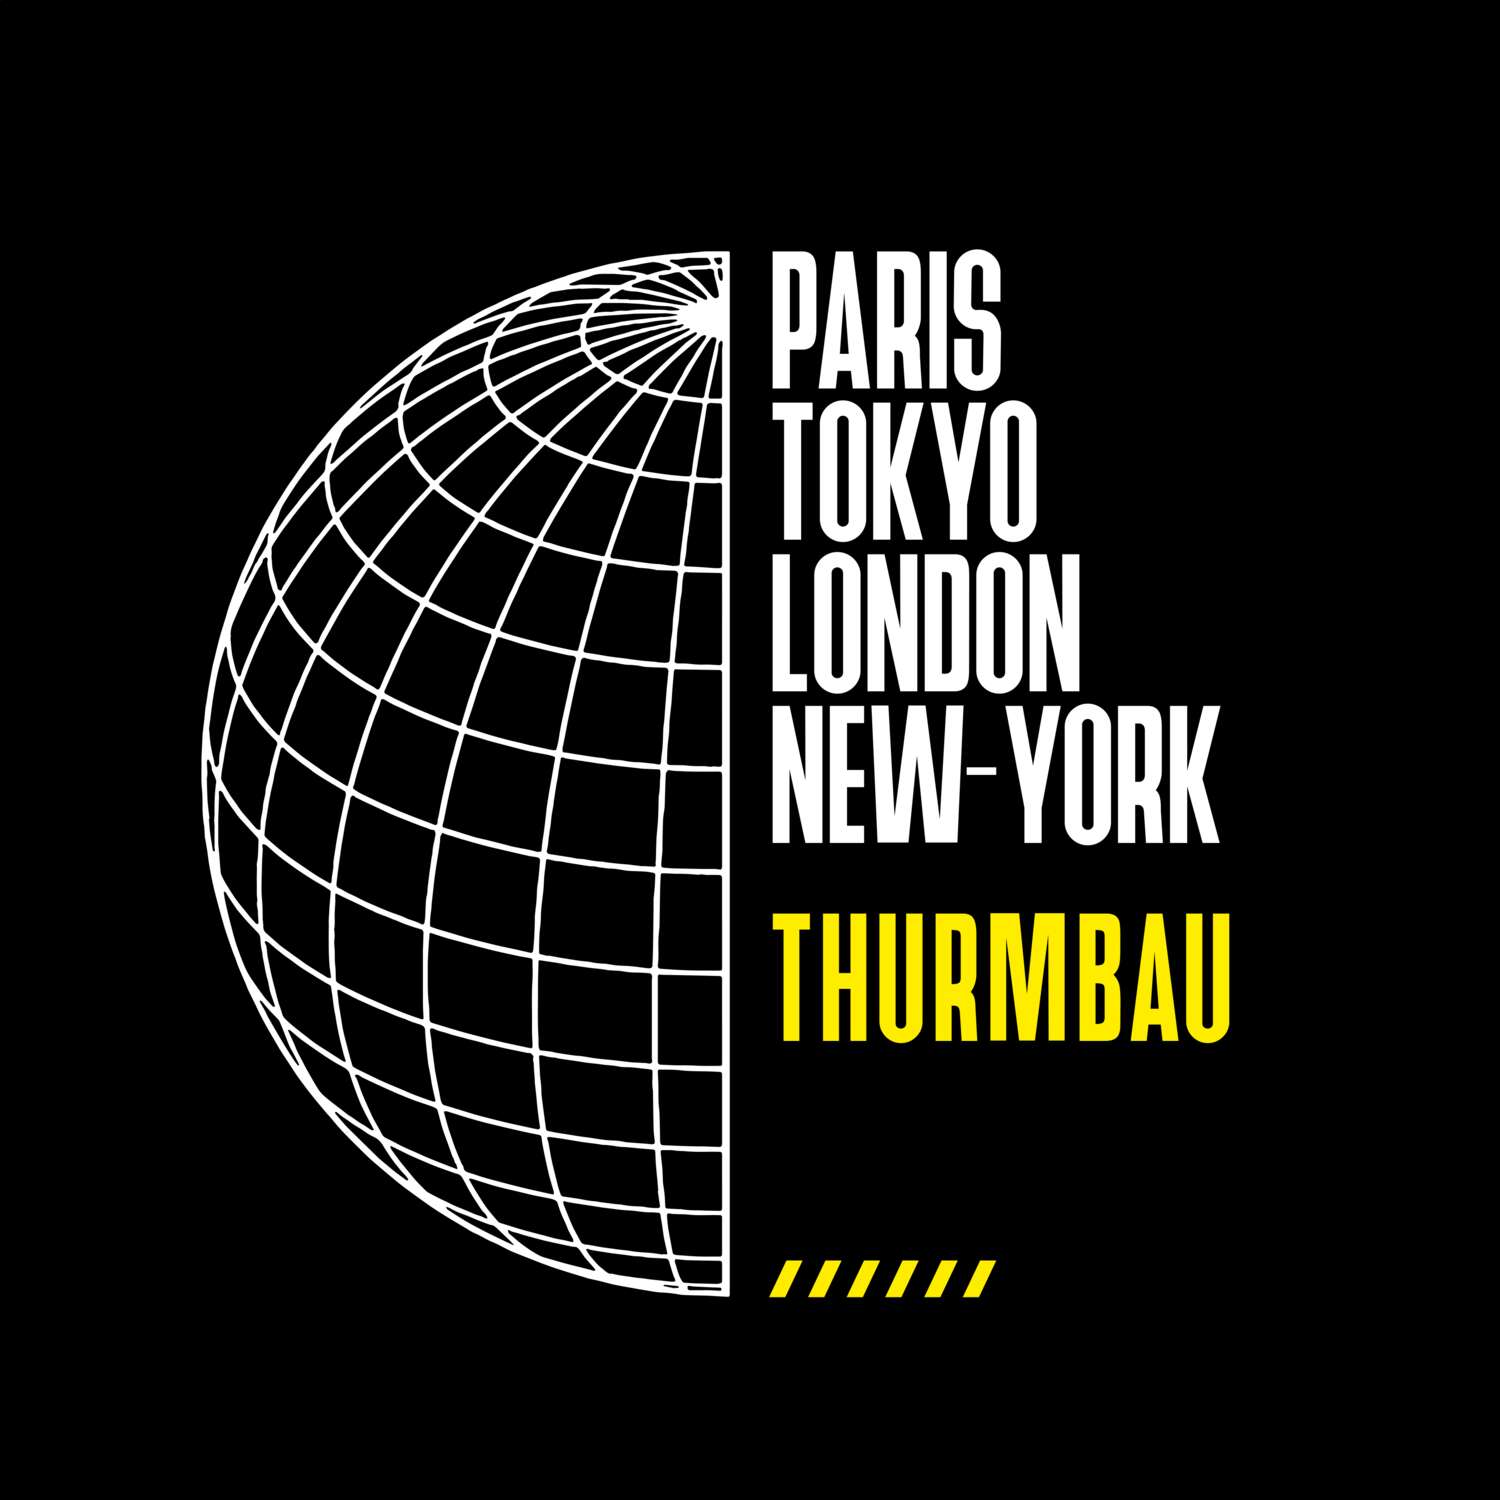 Thurmbau T-Shirt »Paris Tokyo London«